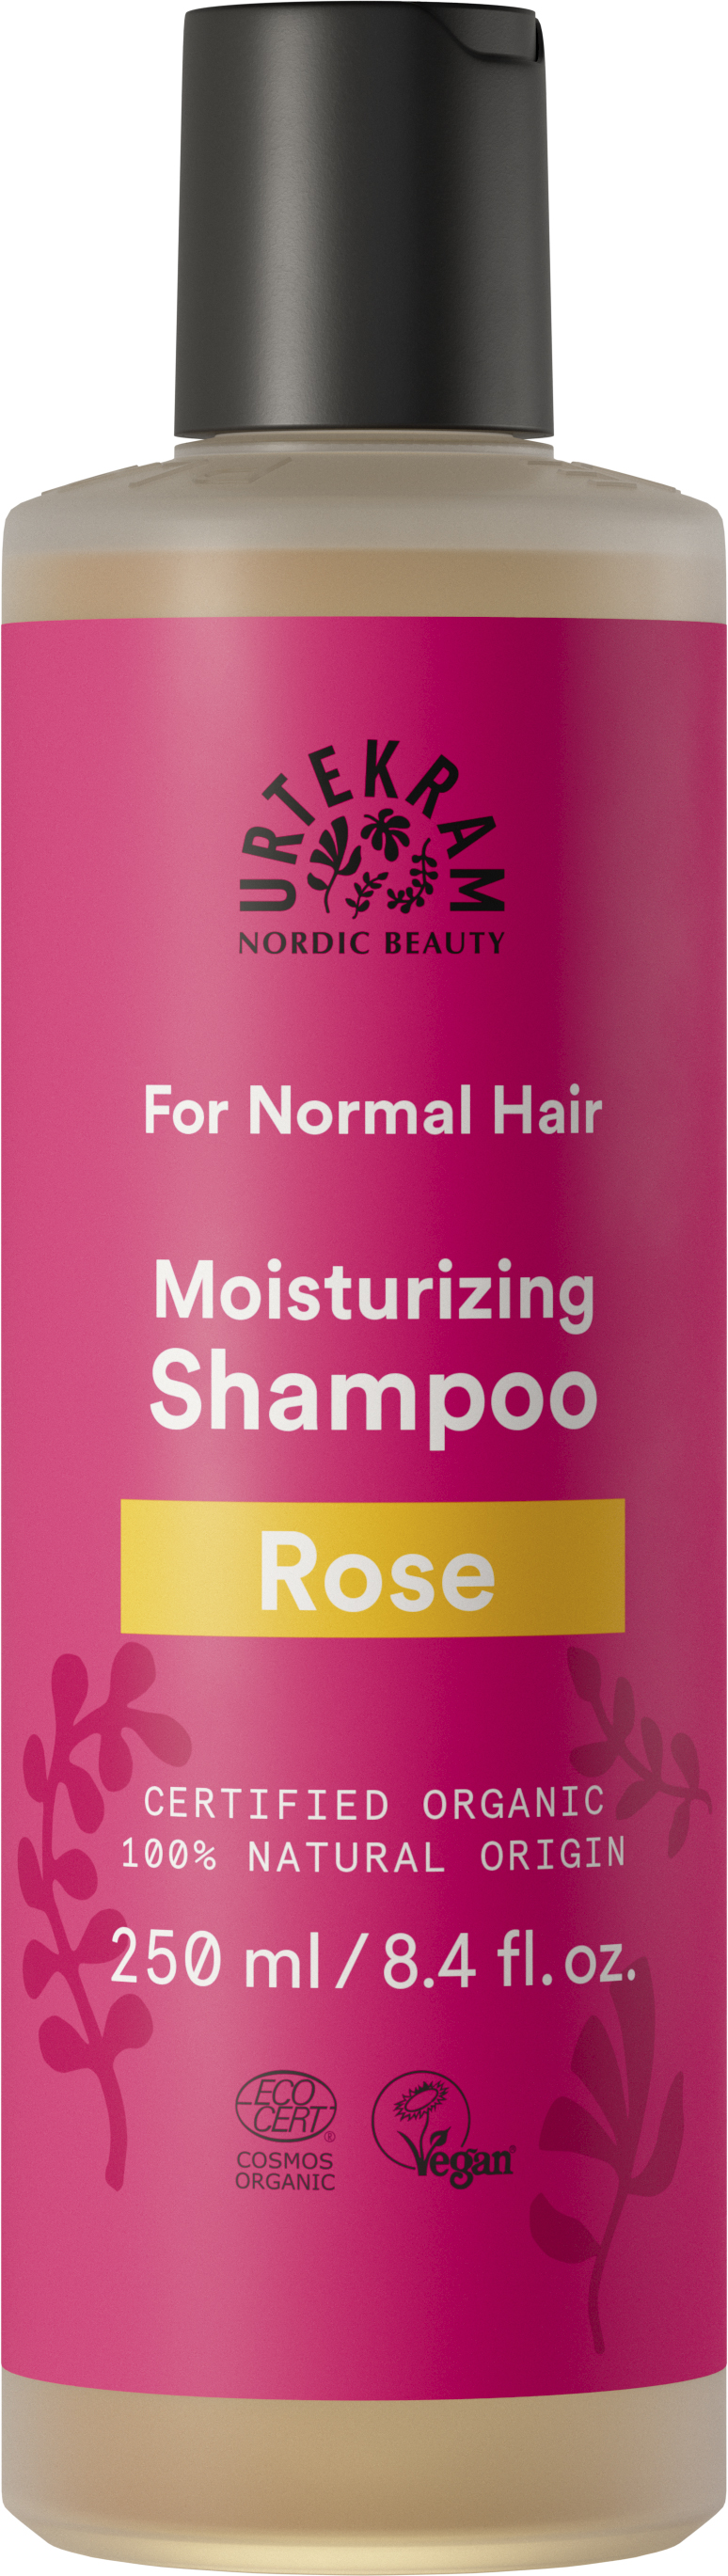 Rose Shampoo